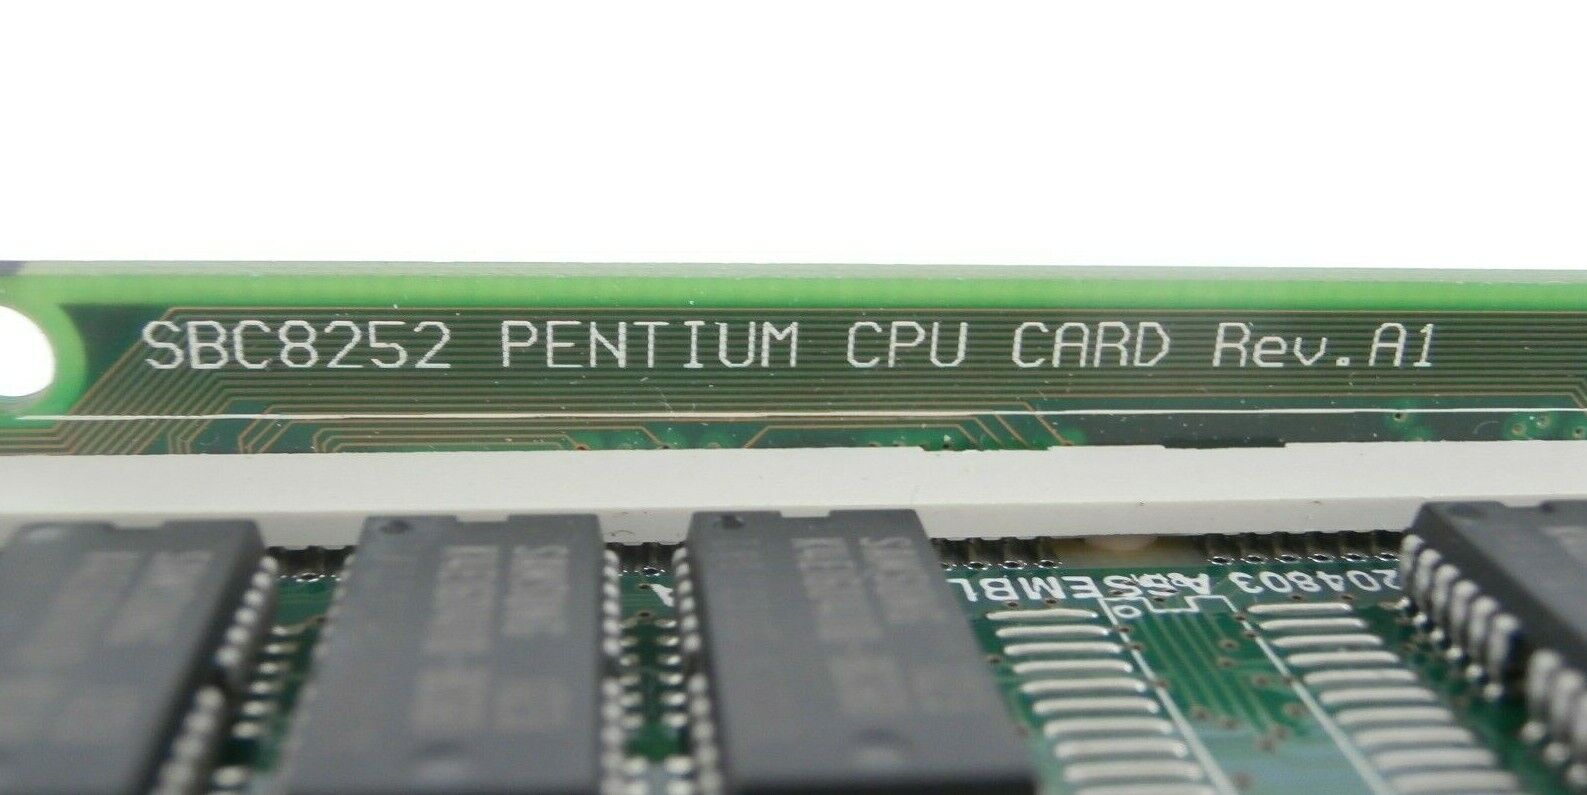 Axiomtek SBC8252 SBC Single Board Computer Pentium CPU PCB Card Rev. A1 Working